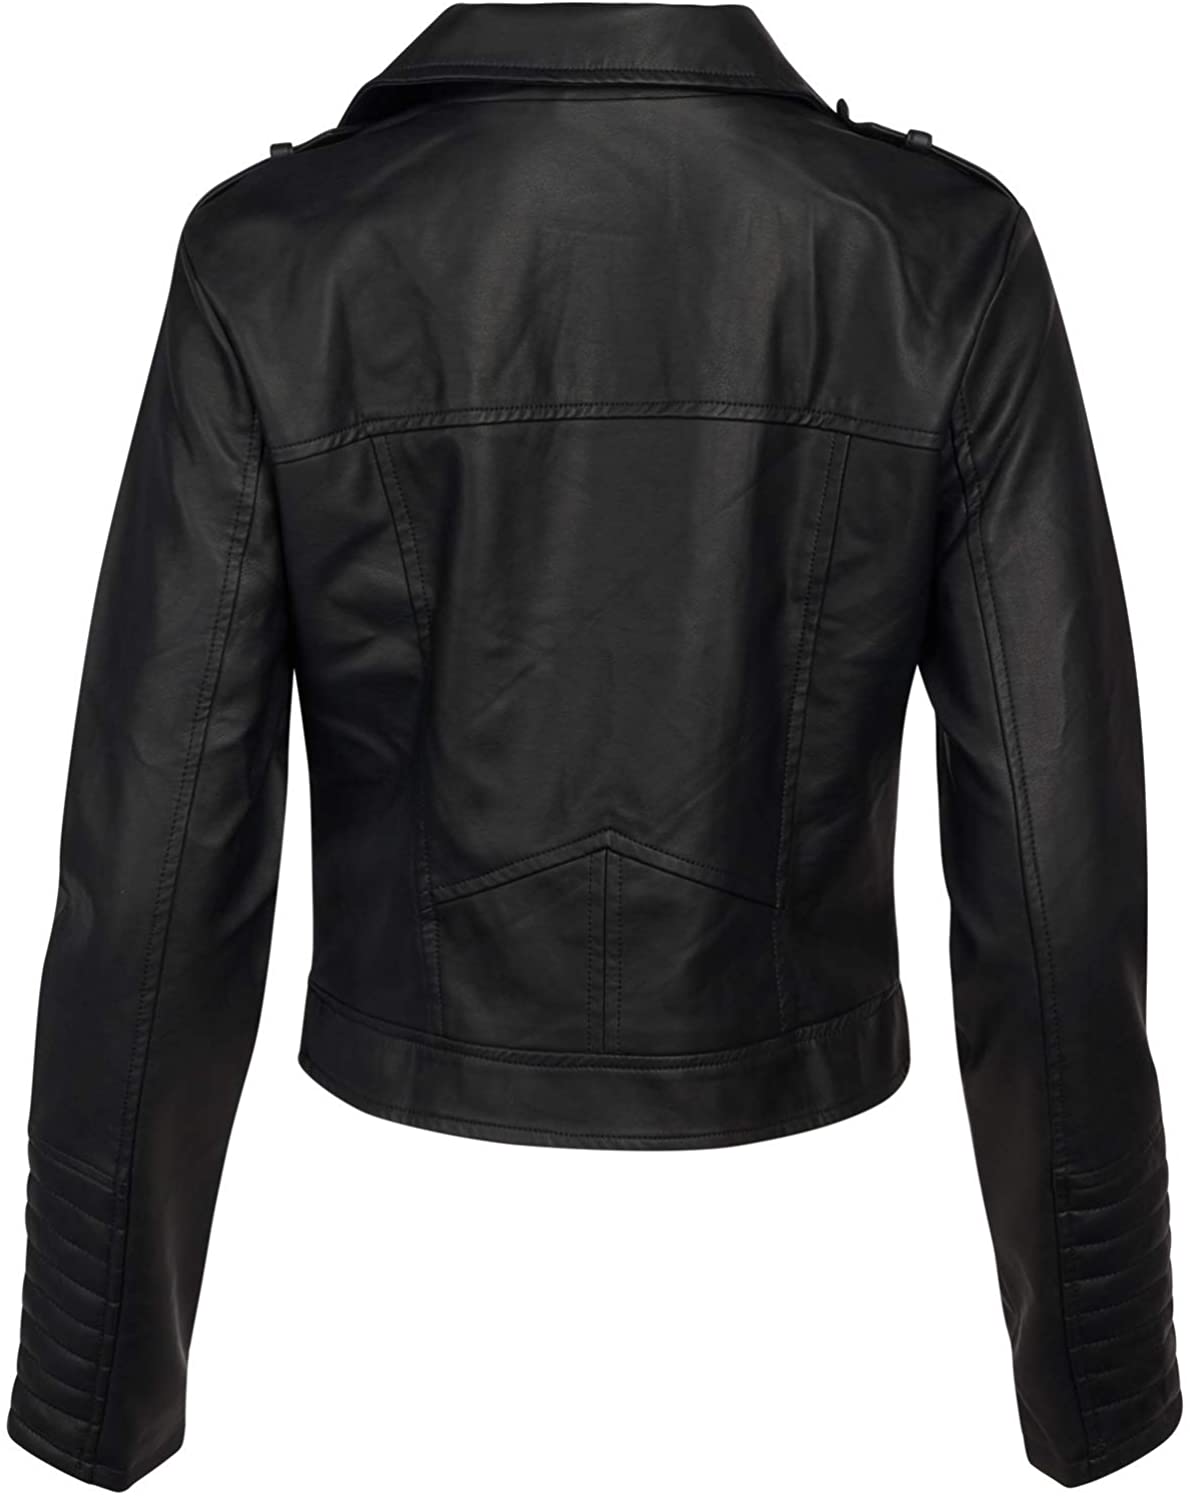 URBAN REPUBLIC Women Faux Leather Moto Biker Jacket with Studded ...